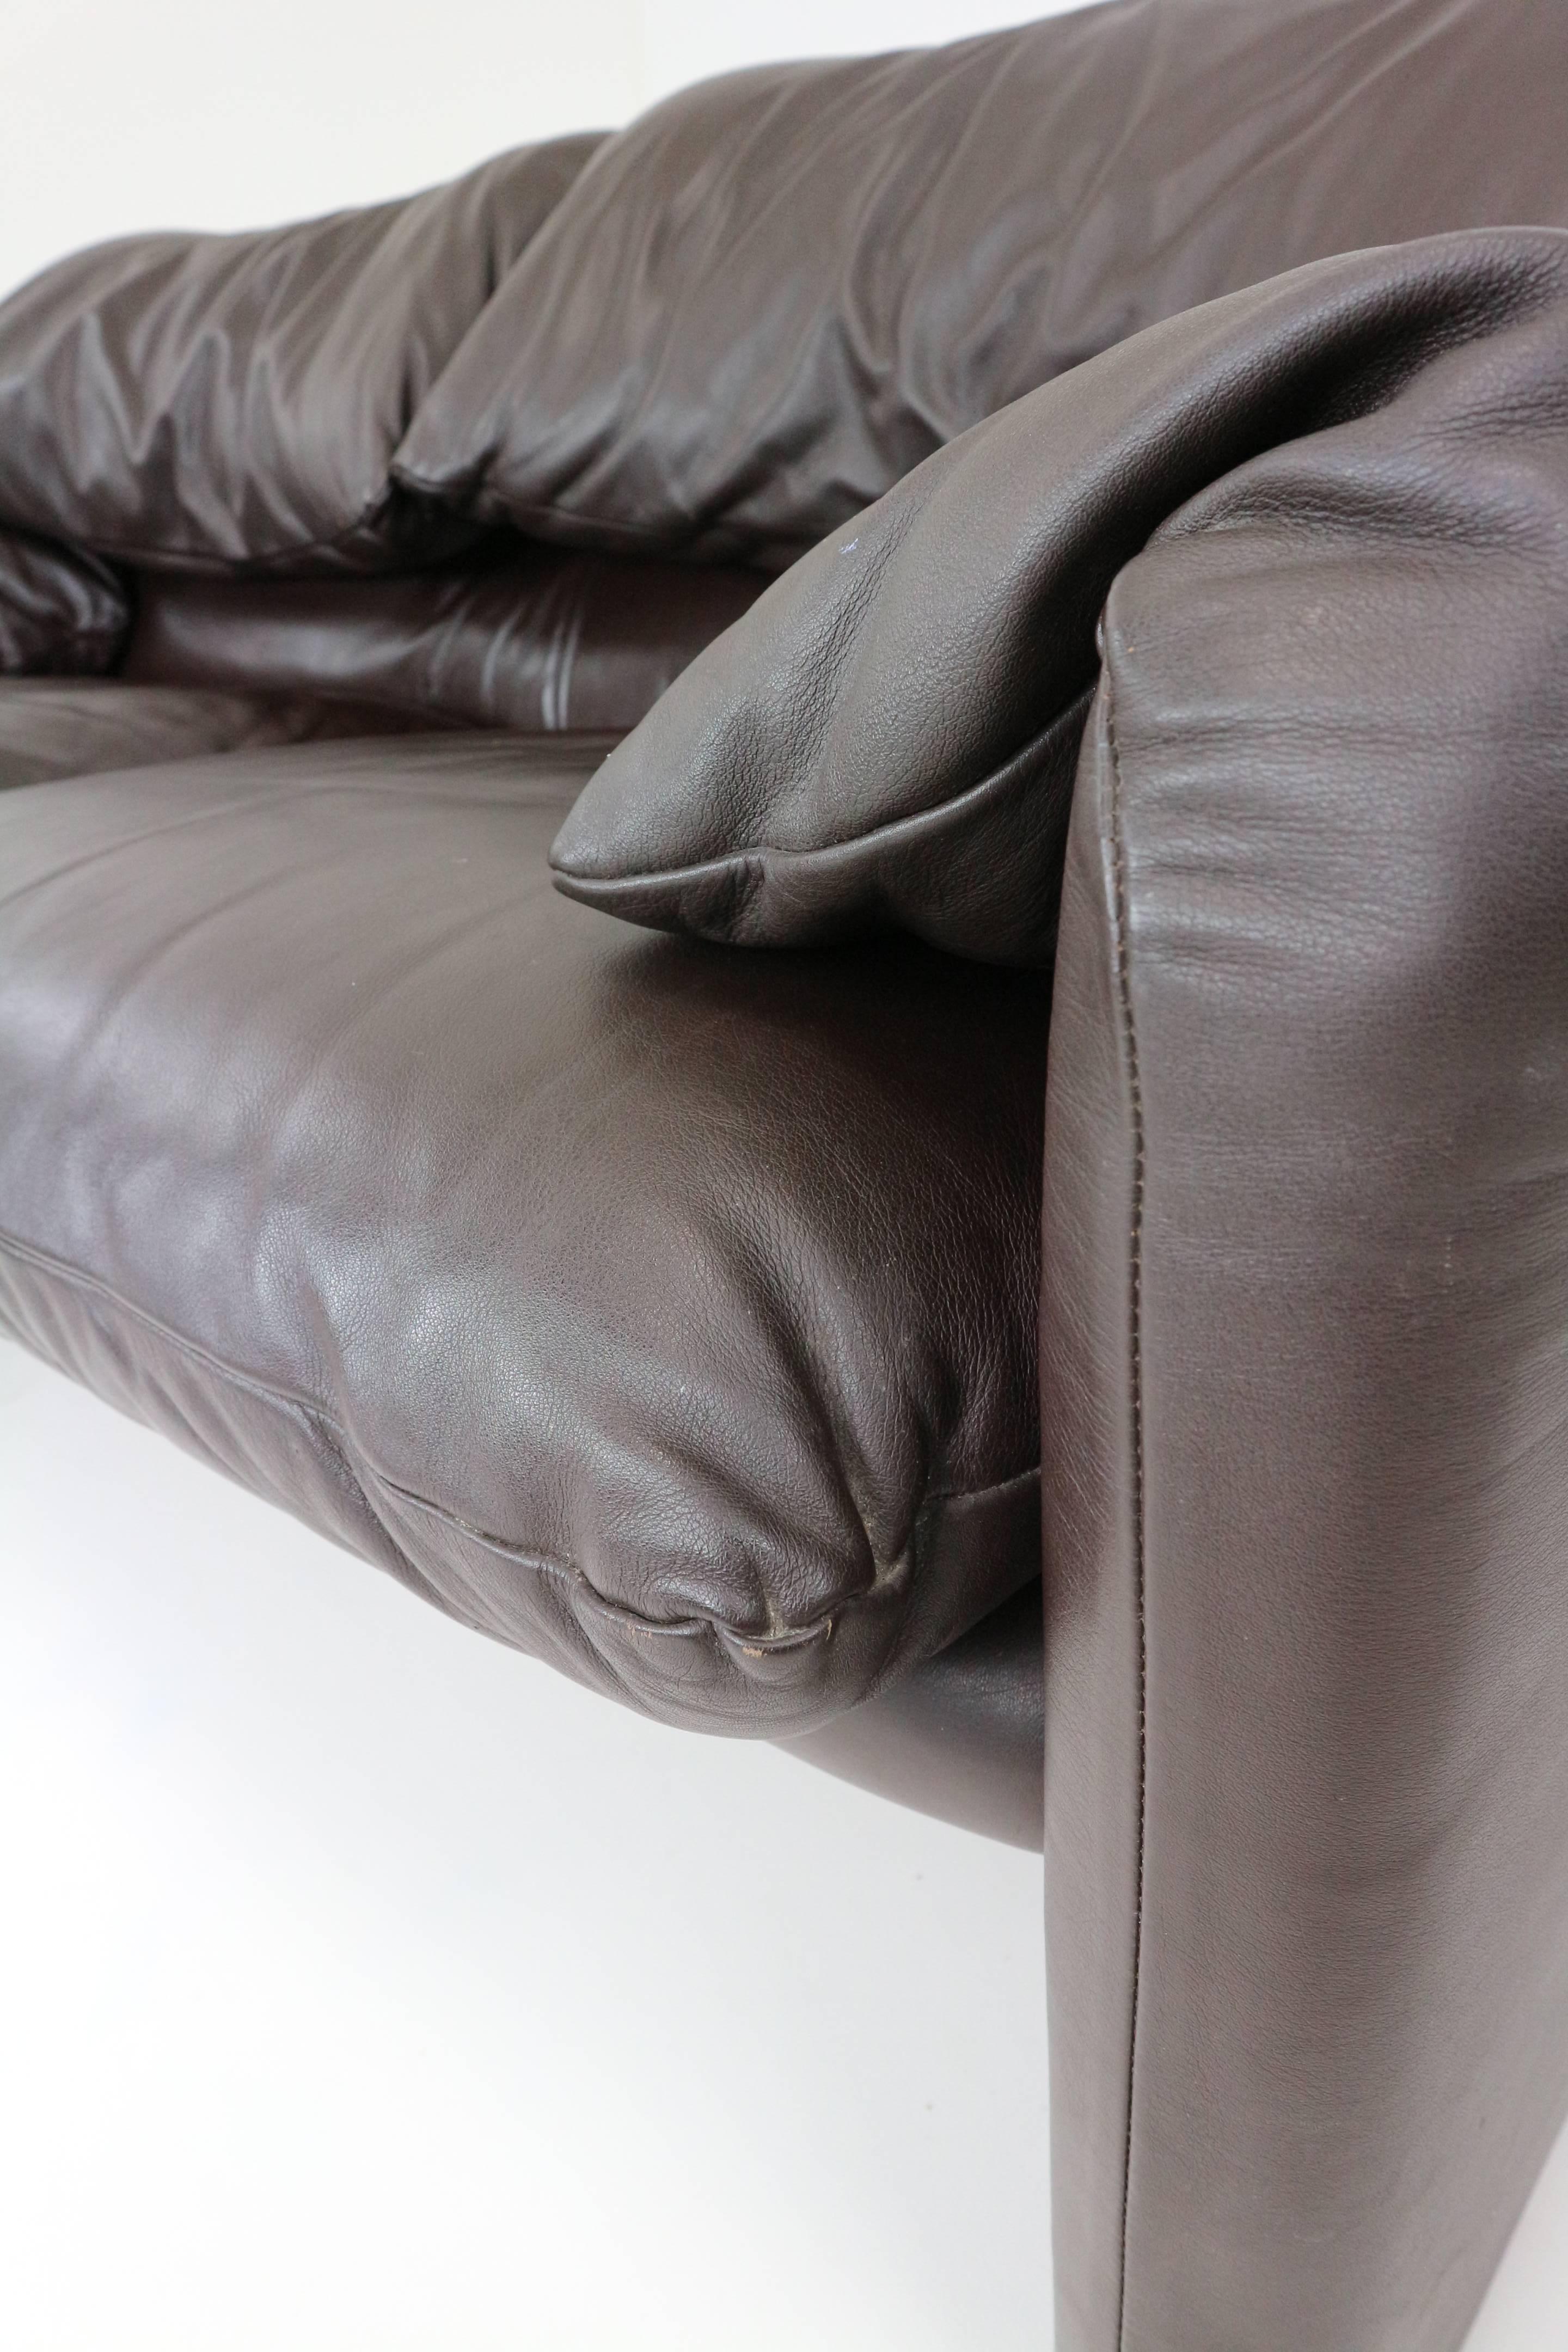 Leather Two-Seat Maralunga Design by Vico Magistretti for Cassina 3